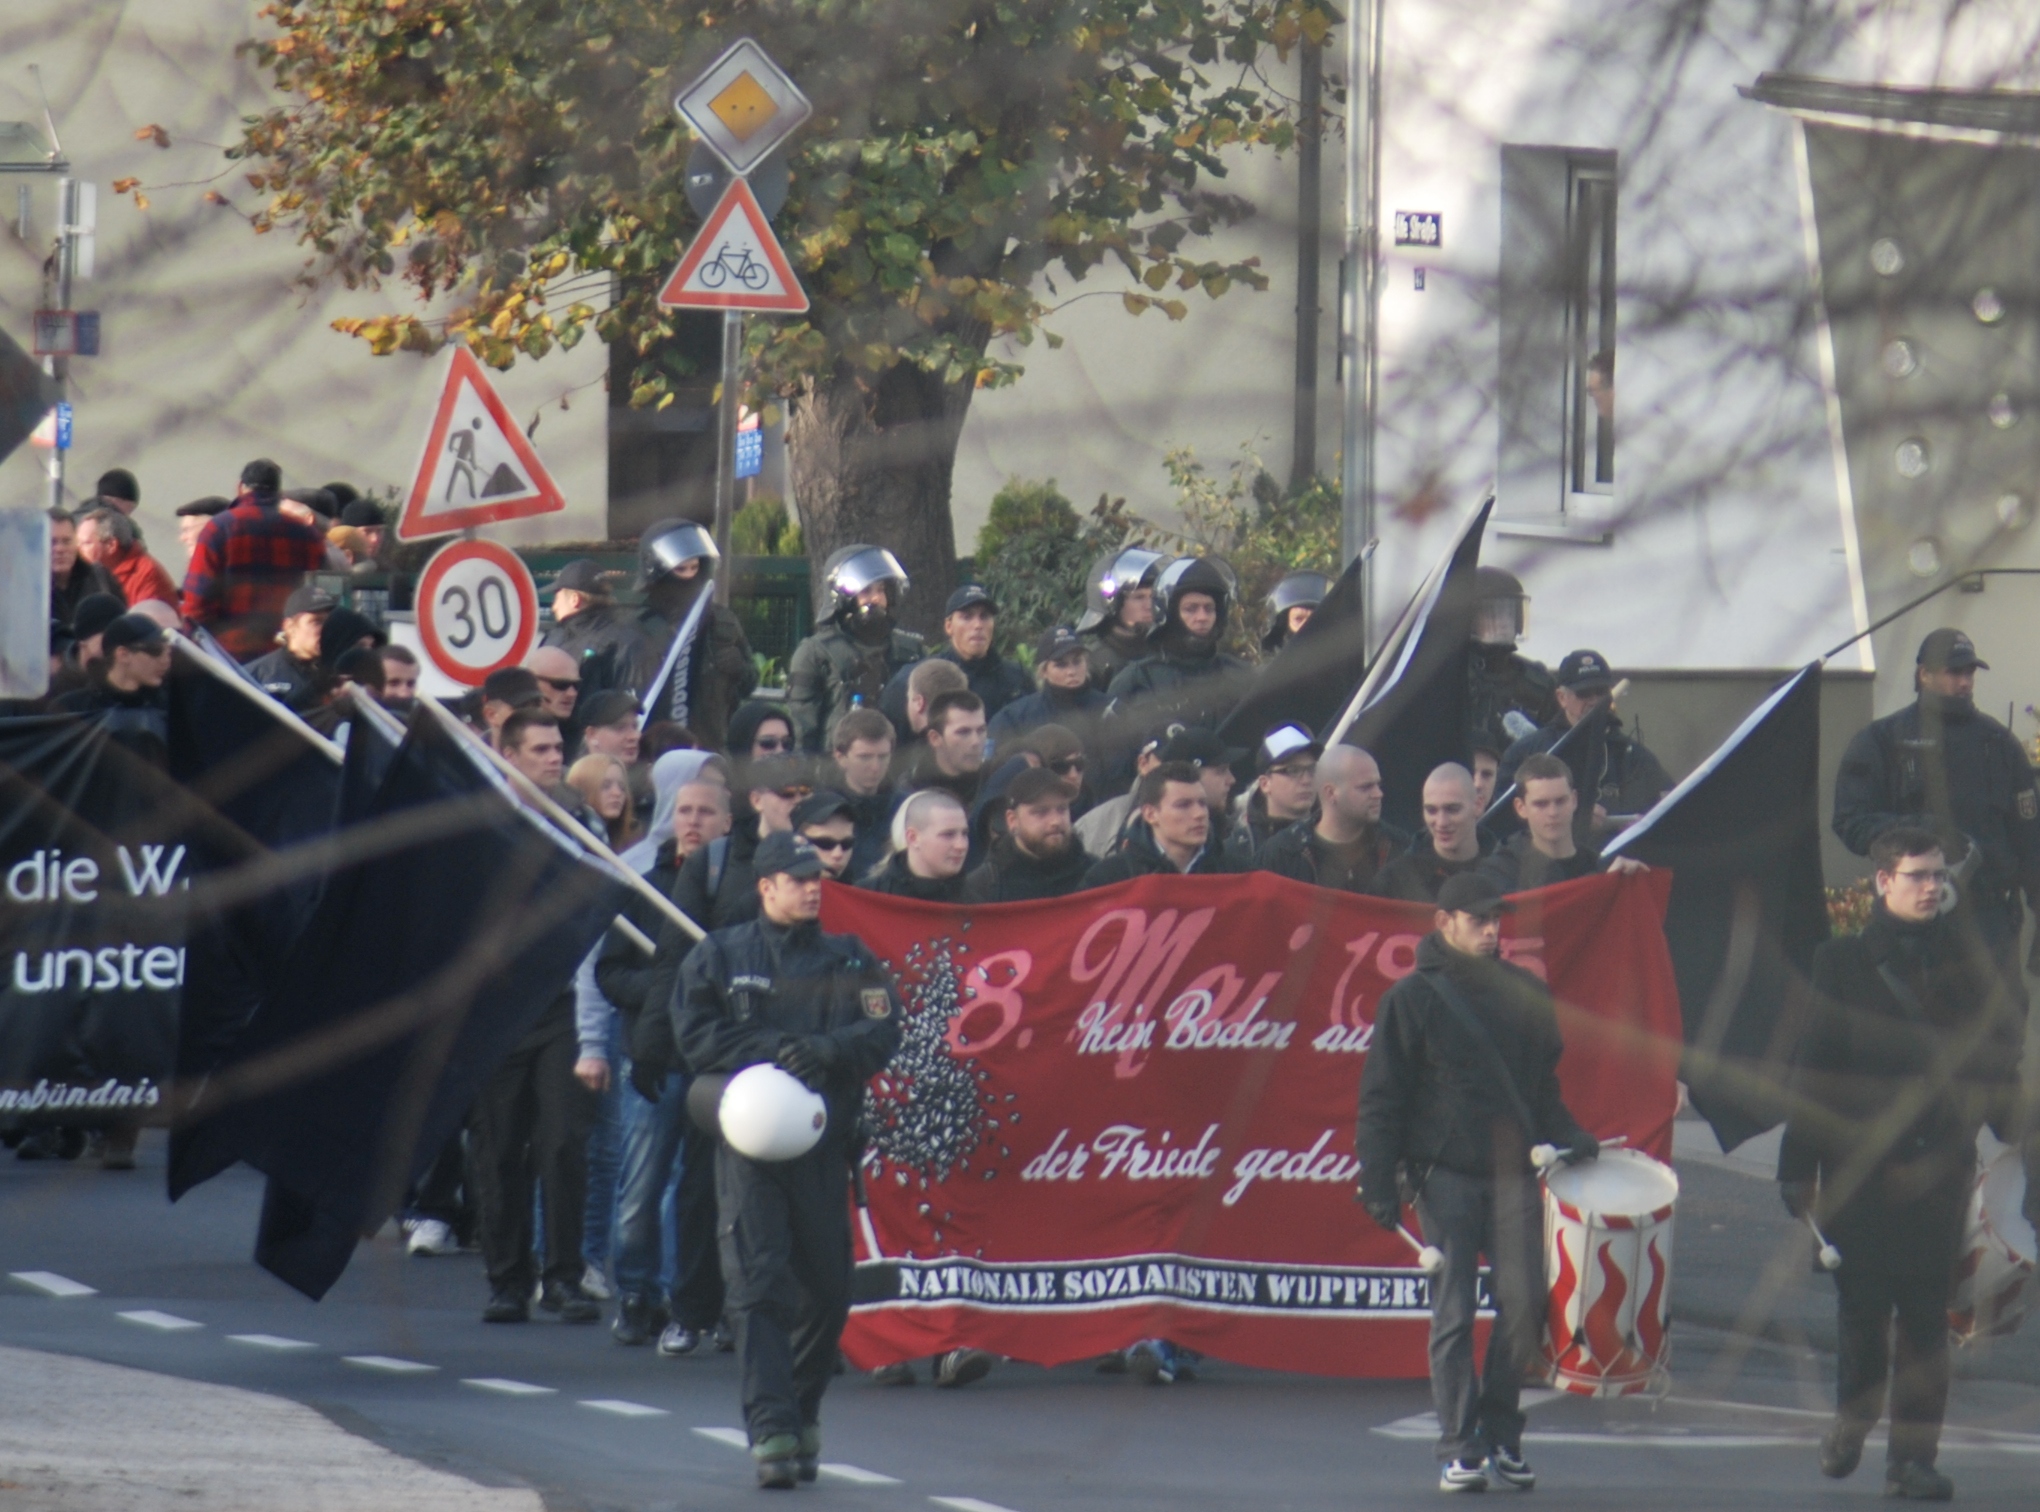 Nationale Sozialisten Wuppertal - Naziaufmarsch in Remagen 2010